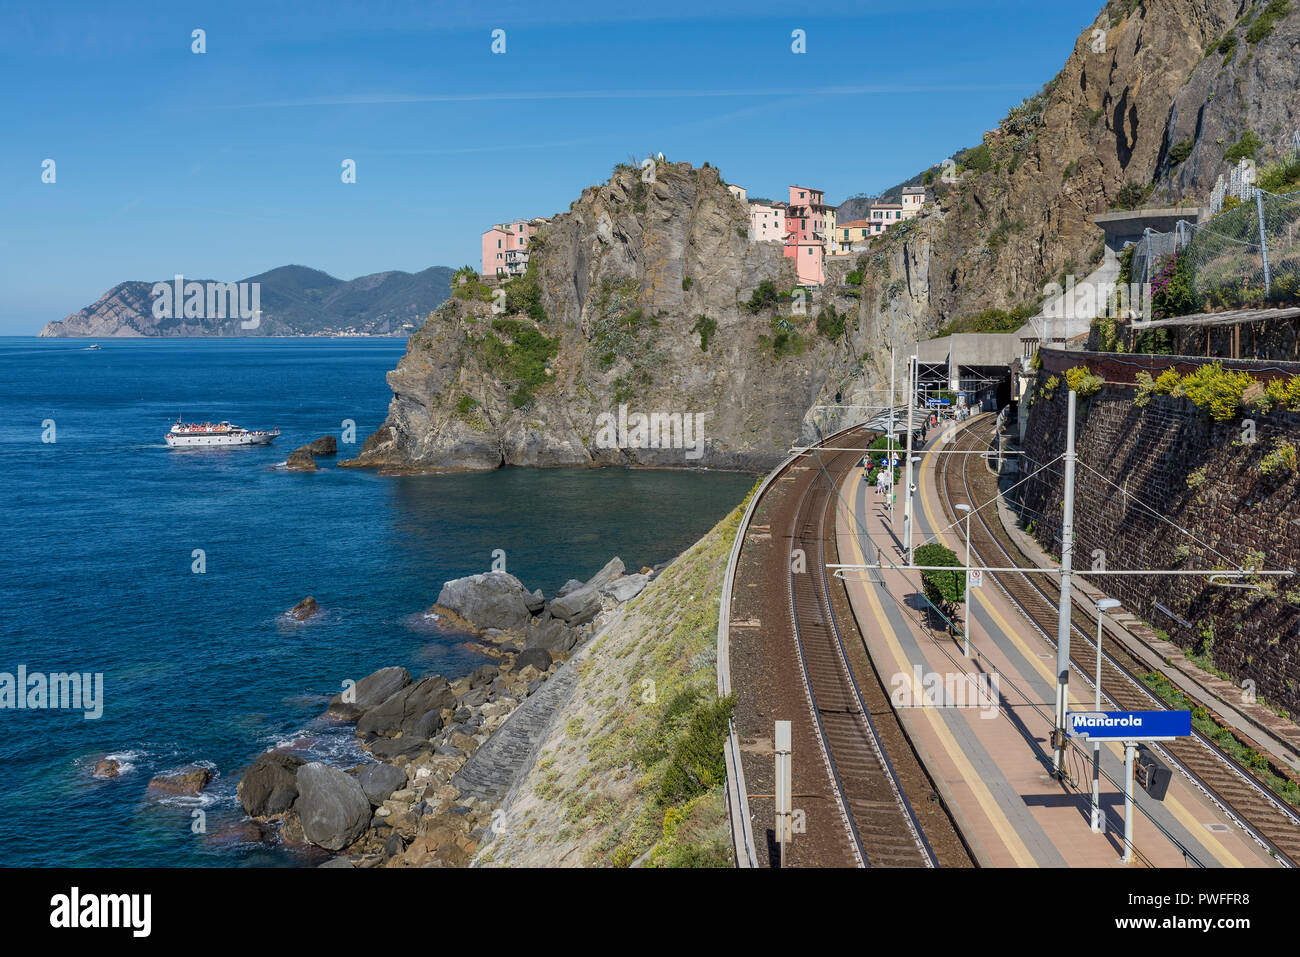 Manarola railway station overlooking the Cinque Terre sea, Liguria, Italy Stock Photo